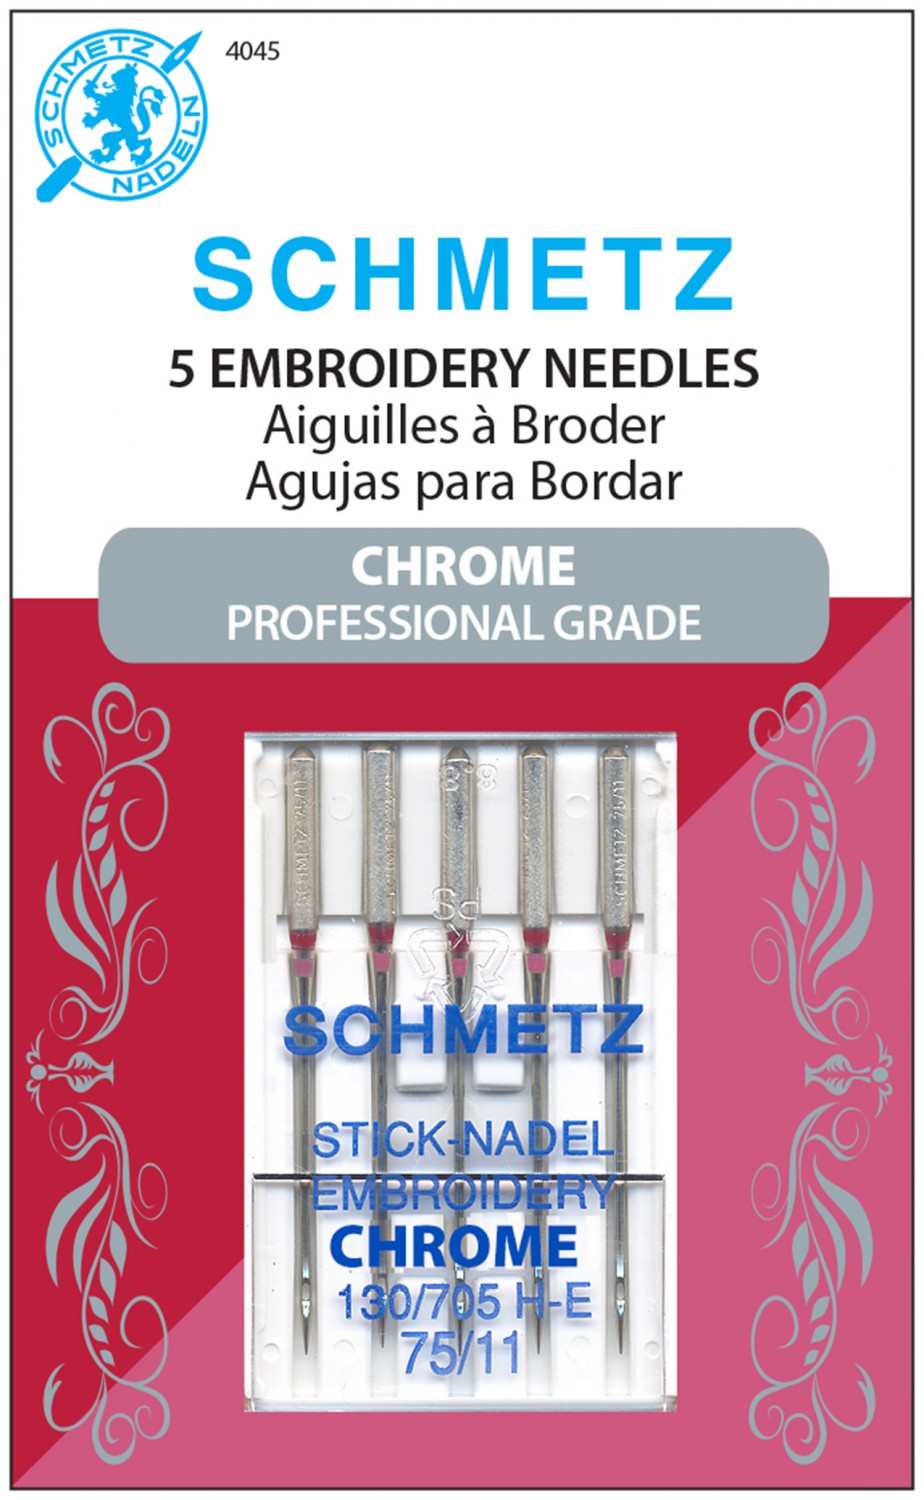 75/11 Chrome Embroidery Needles